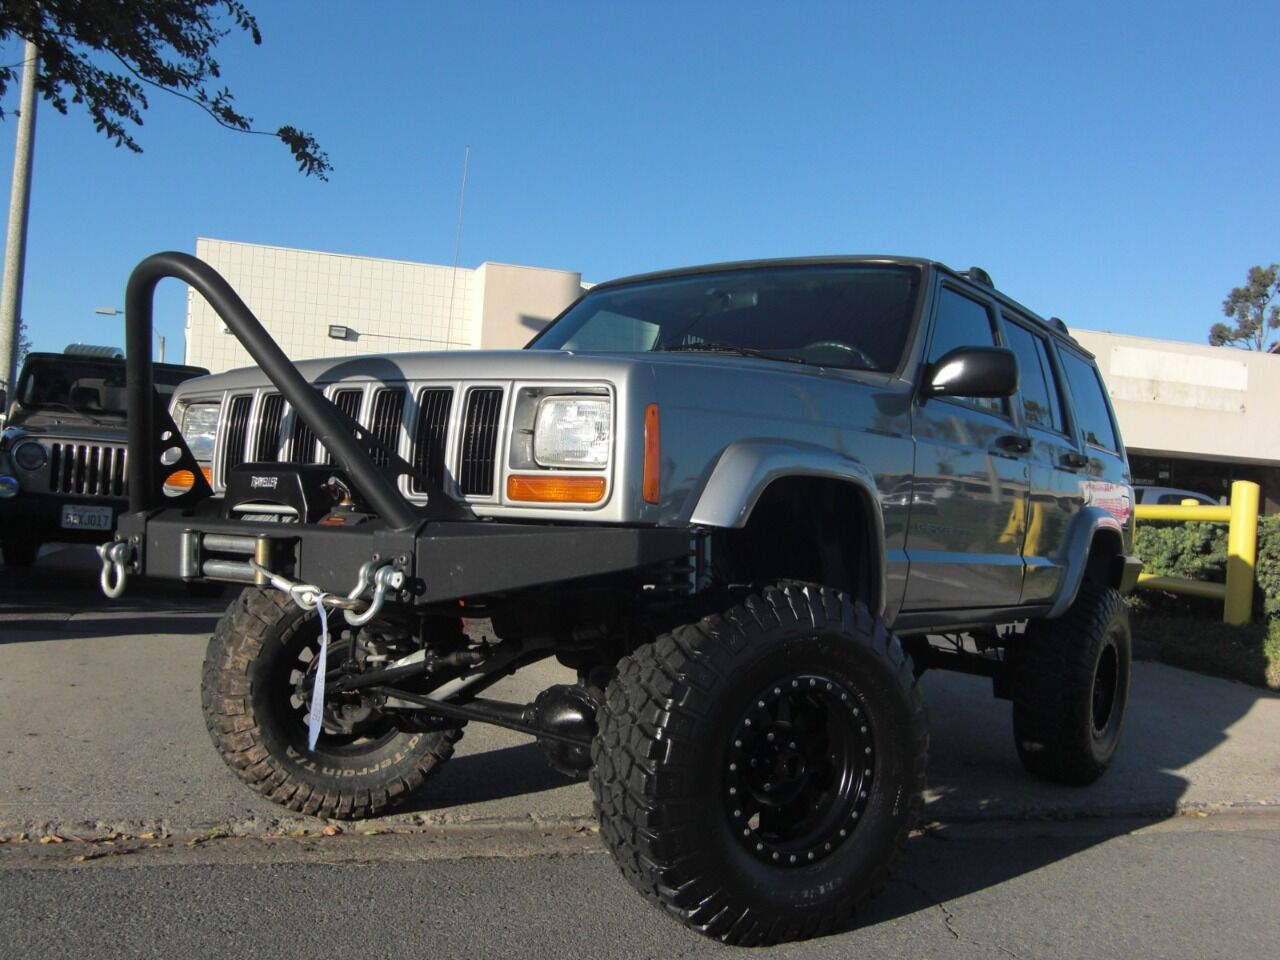 2000 Jeep Cherokee For Sale - Carsforsale.com®